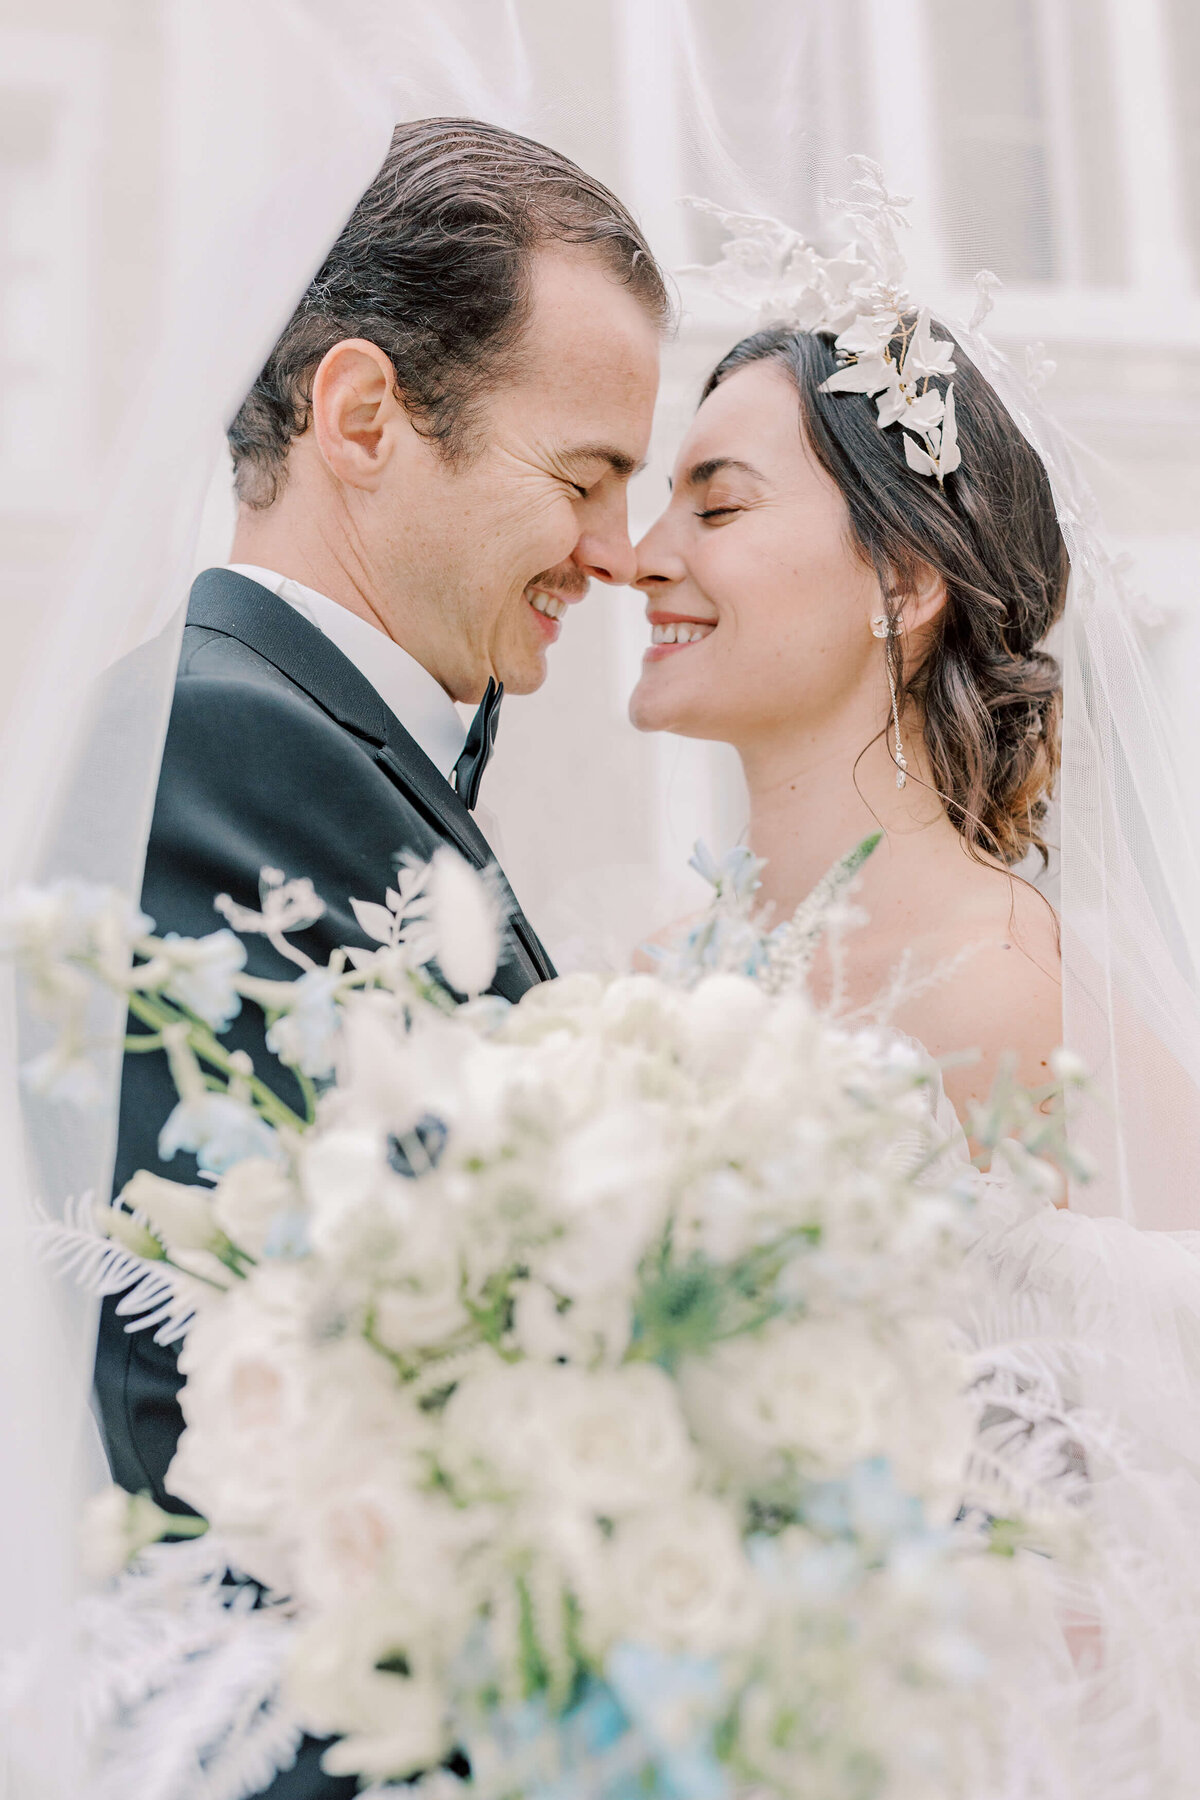 Winter Wedding at Chateau Saint-Joseph - Jeanette Merstrand Photography - Victoria Engelen Flowers_0059